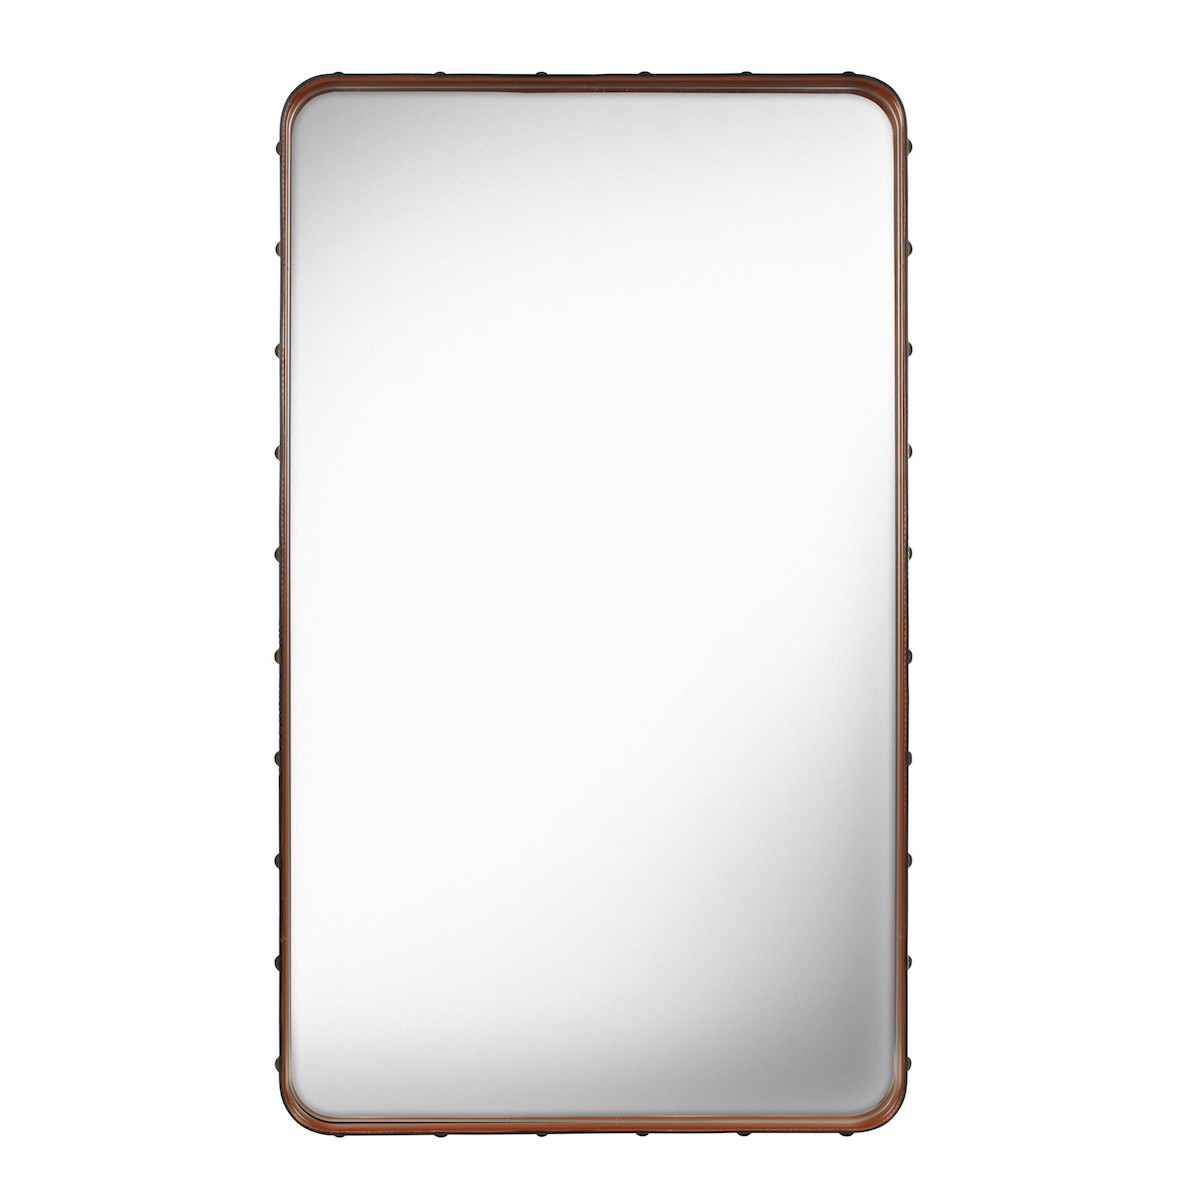 115x65cm - Tan Leather - Adnet rectangular mirror